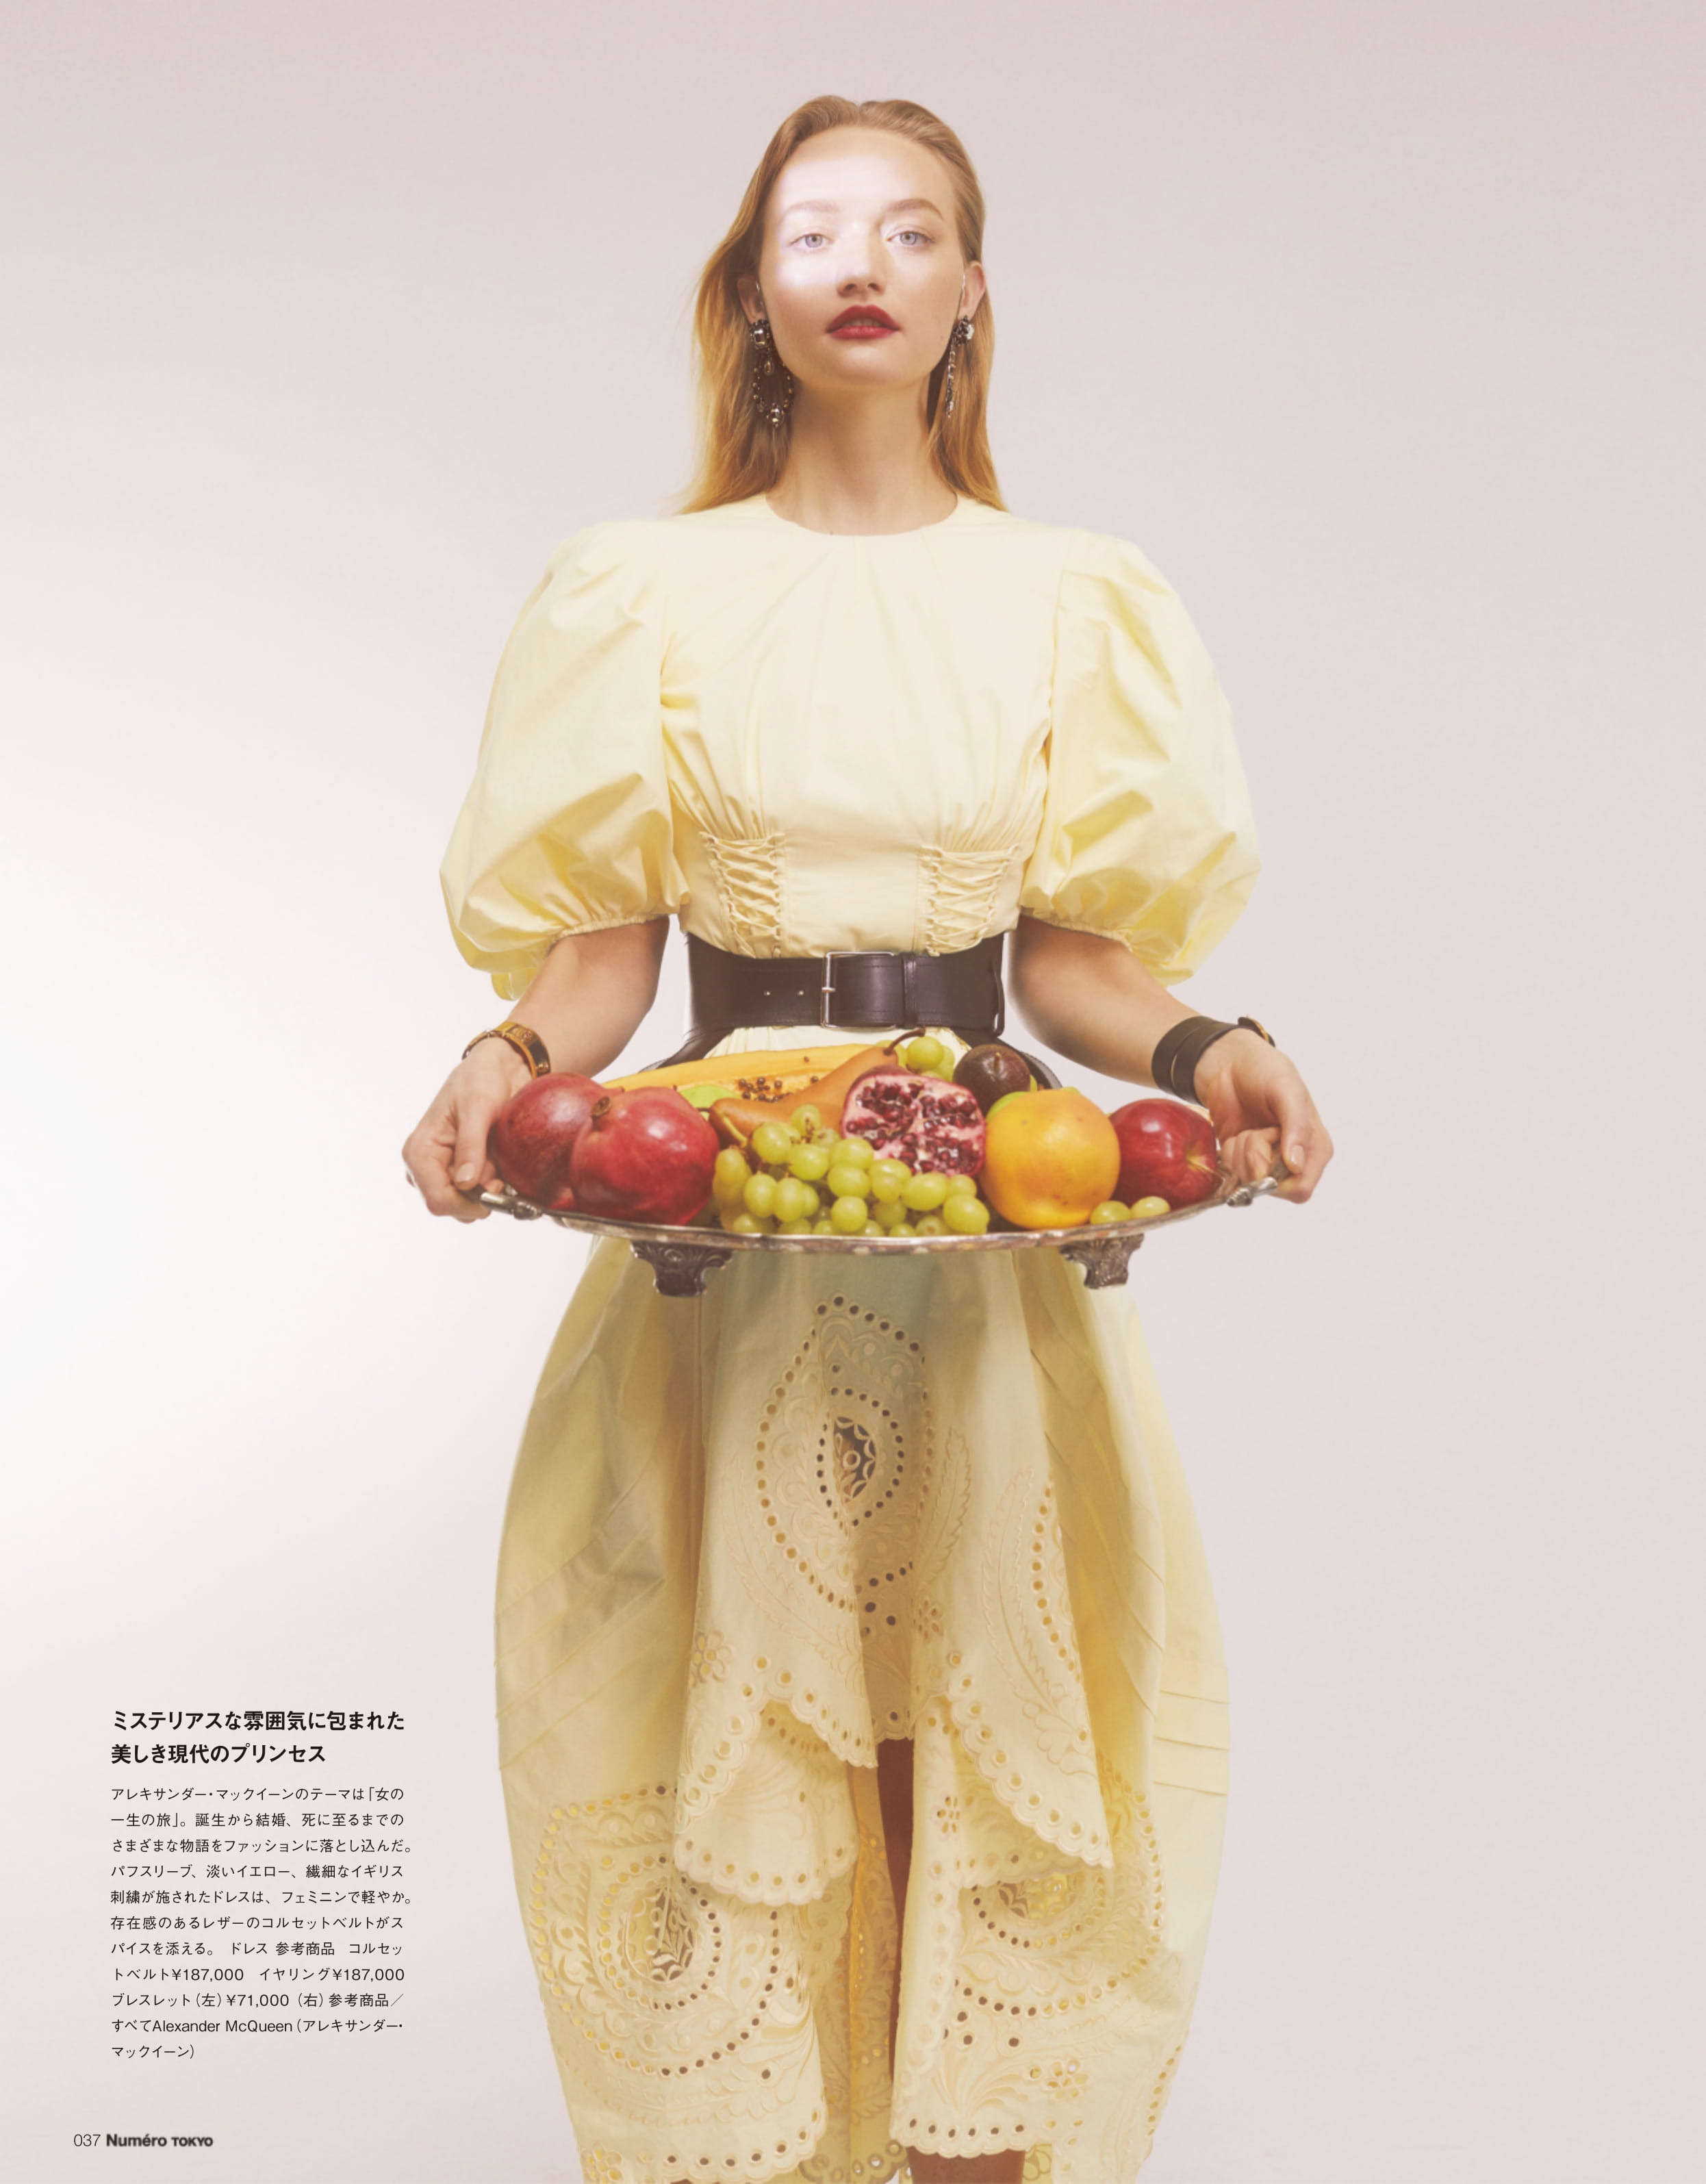 Gemma Ward by Zoey Grossman for Numero Tokyo (5).jpg